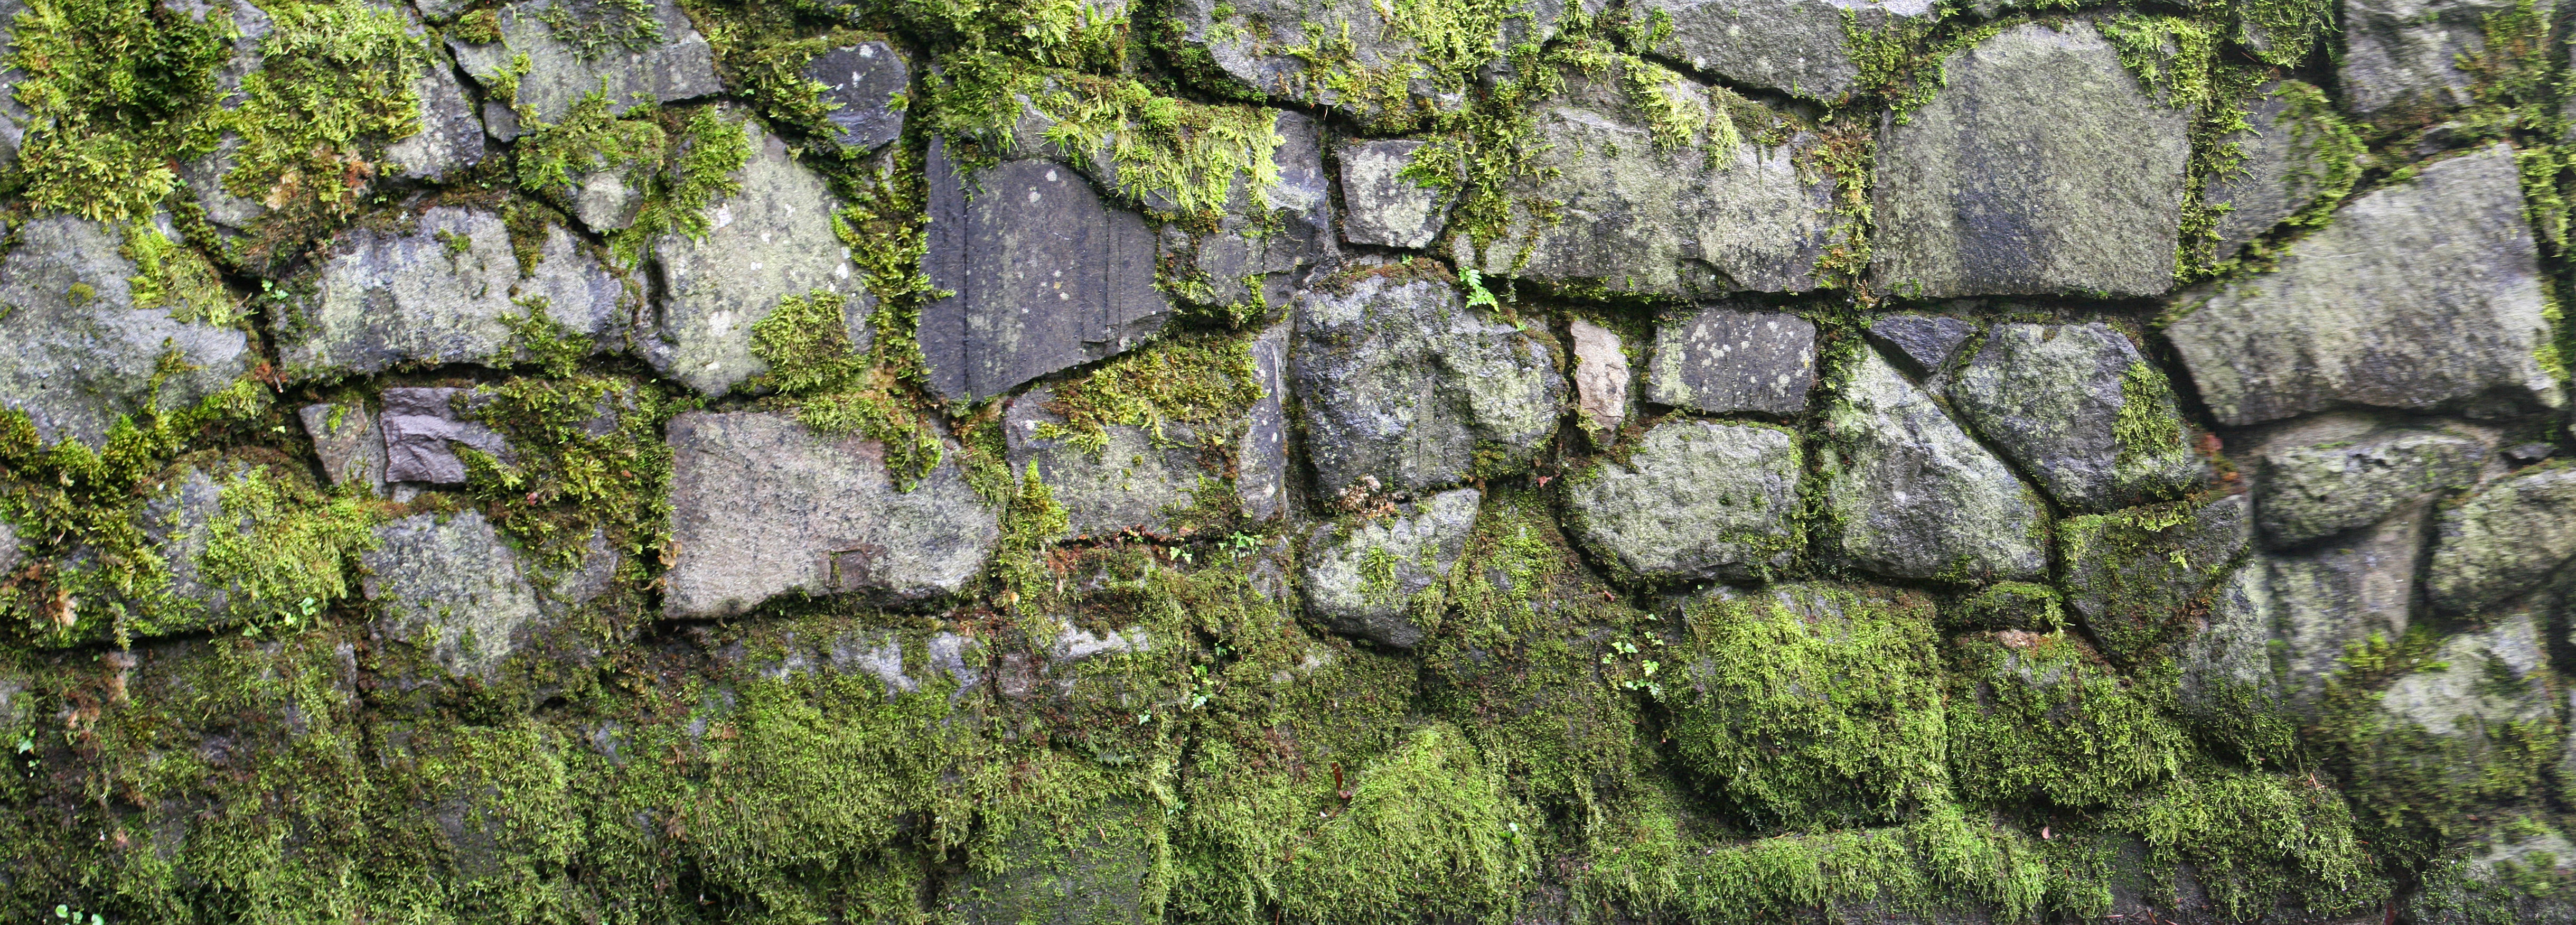 Moss texture photo